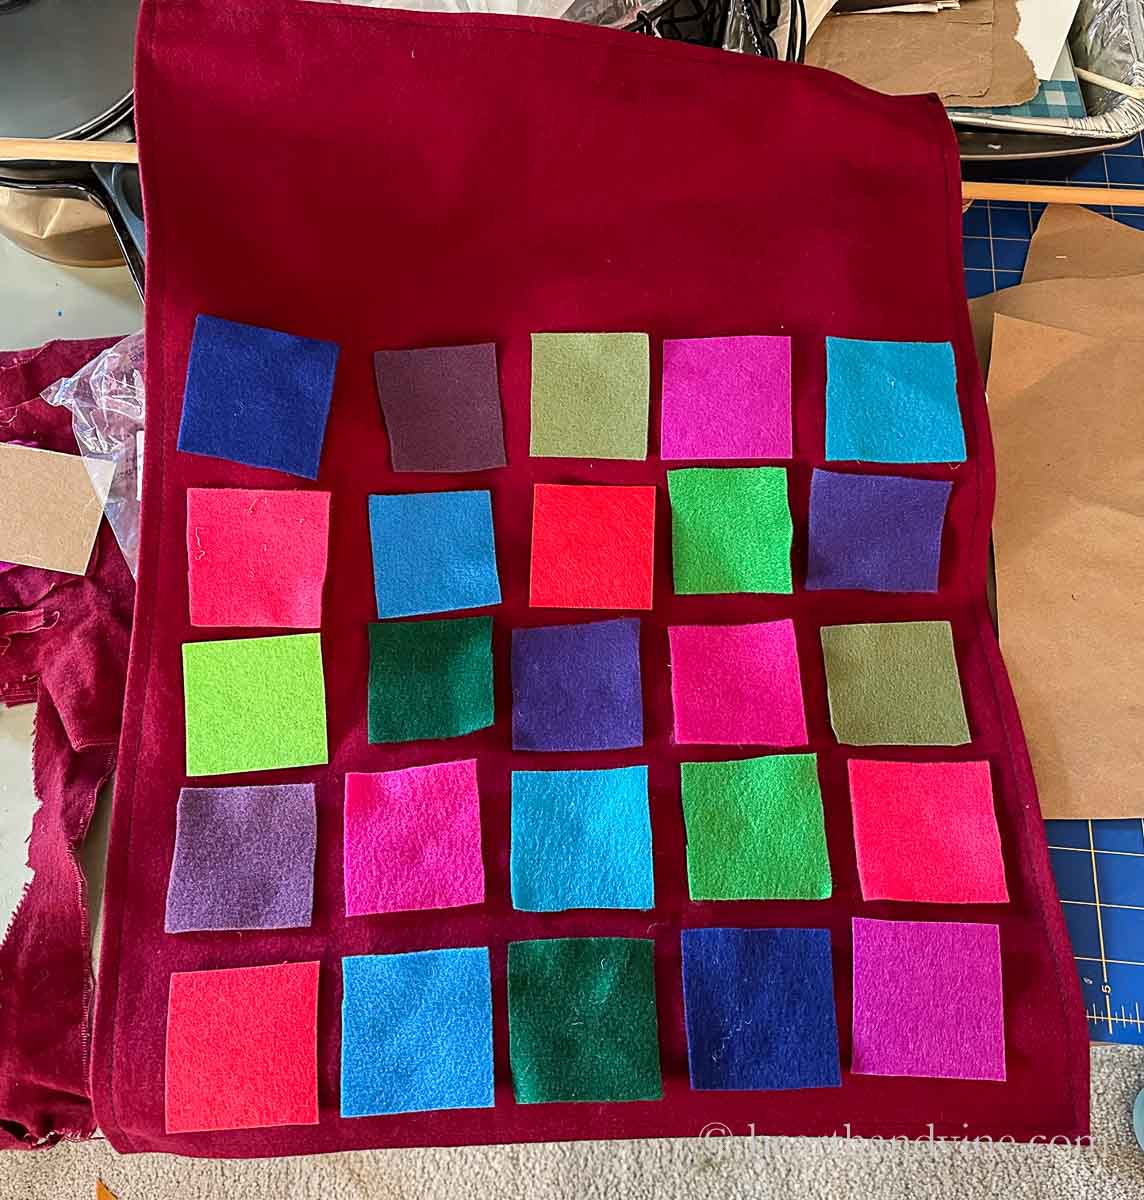 Twenty five colored squares of felt arranged on a dark red backing.